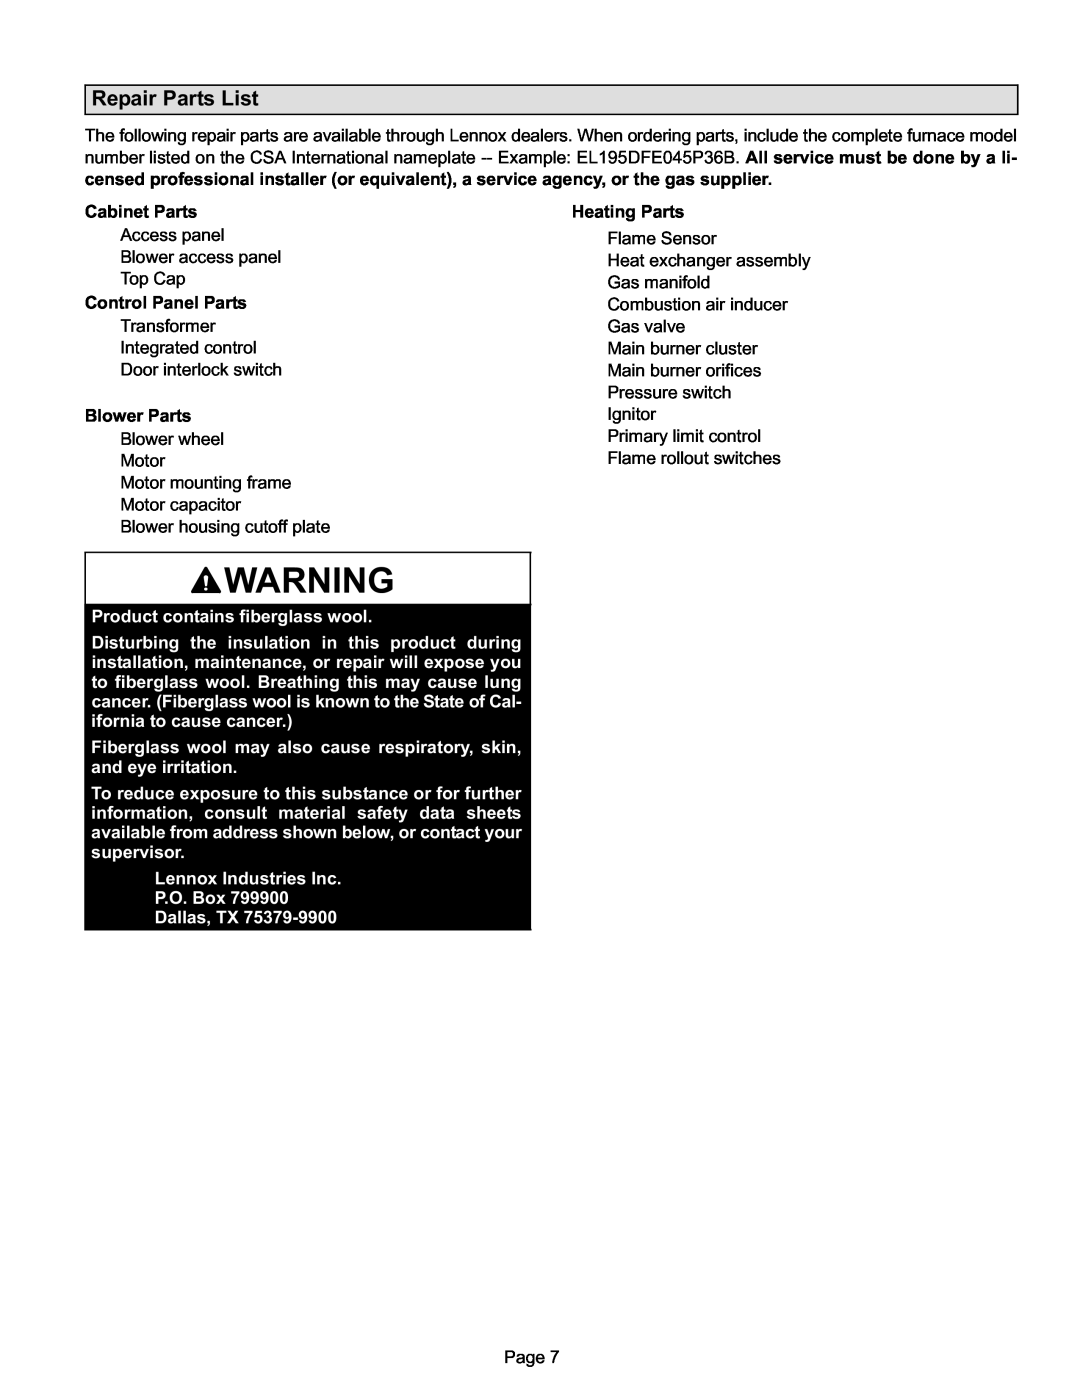 Lennox International Inc EL195DFE Series, Gas Furnace manual Repair Parts List 